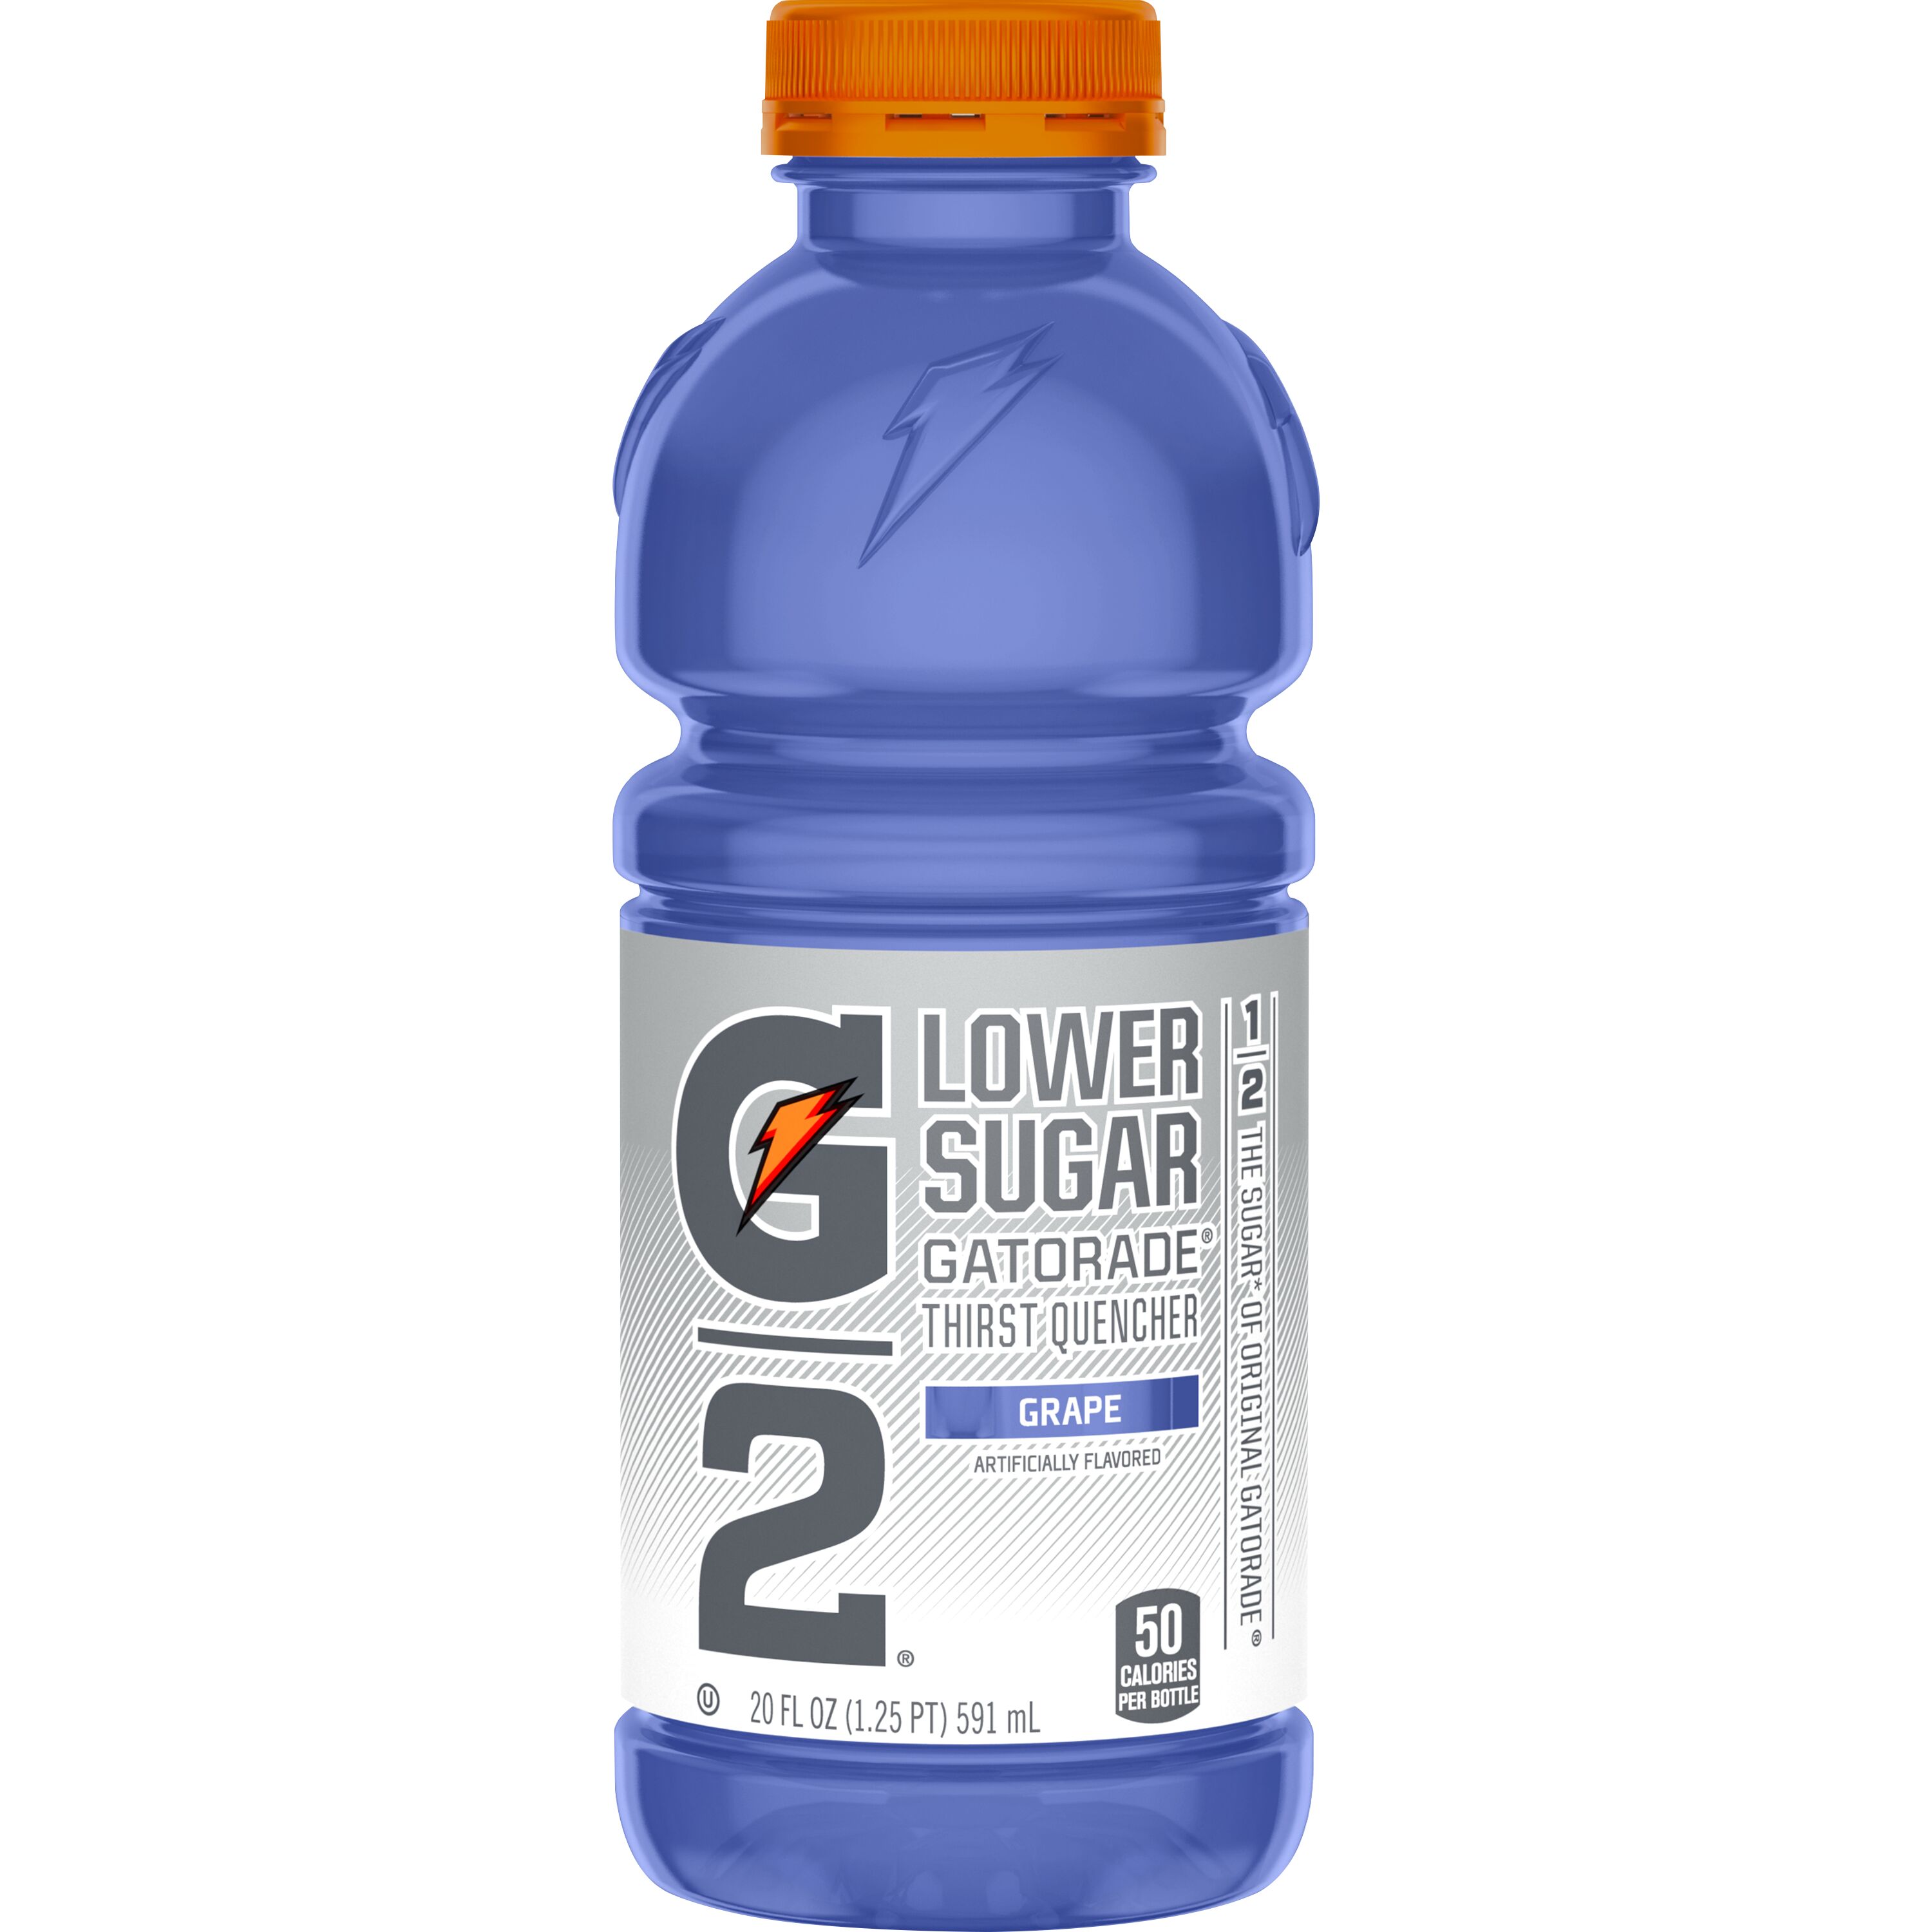 Gatorade G2 Thirst Quencher Lower Sugar Grape Sports Drink, 20 fl oz, 8 Count Bottles - image 2 of 10